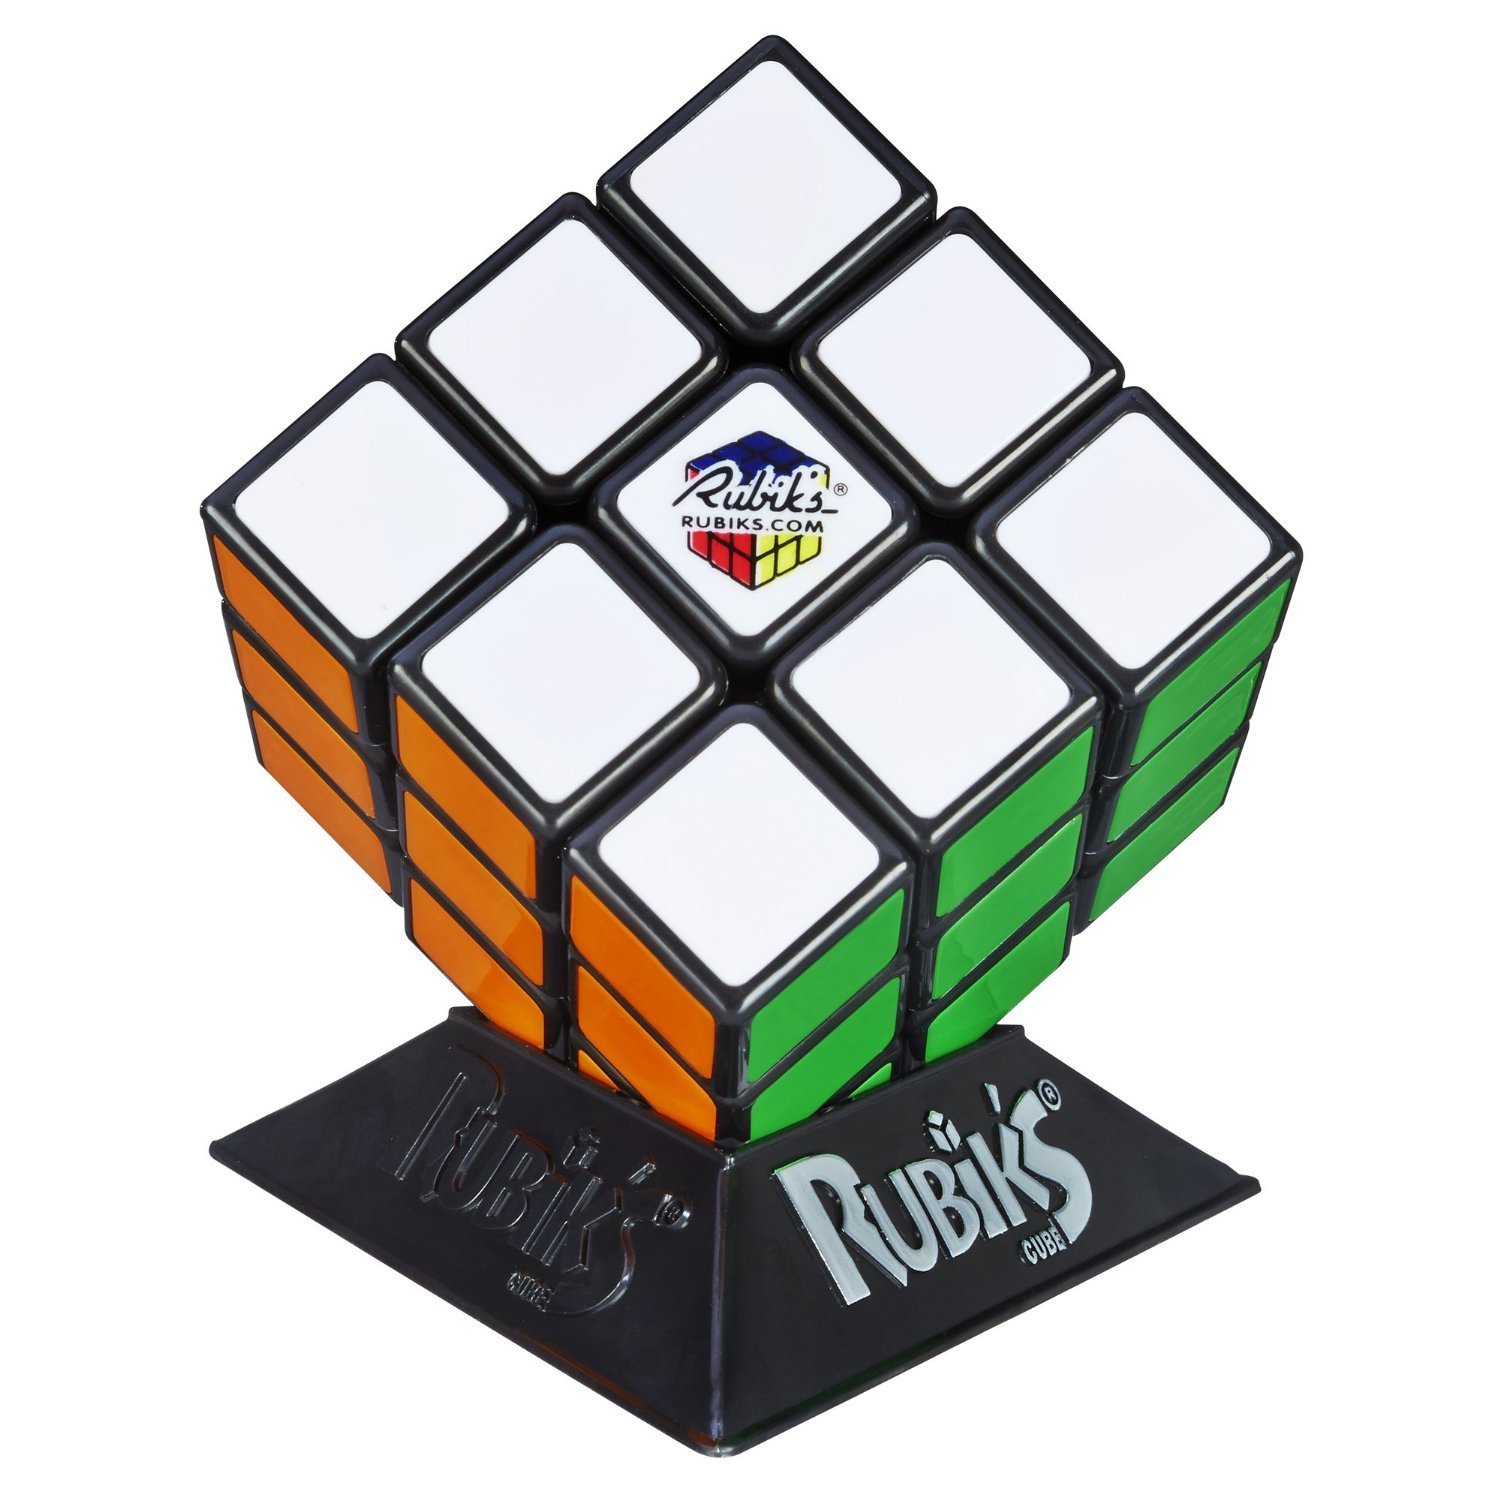 Rubik’s Cube Game – Just $7.48!